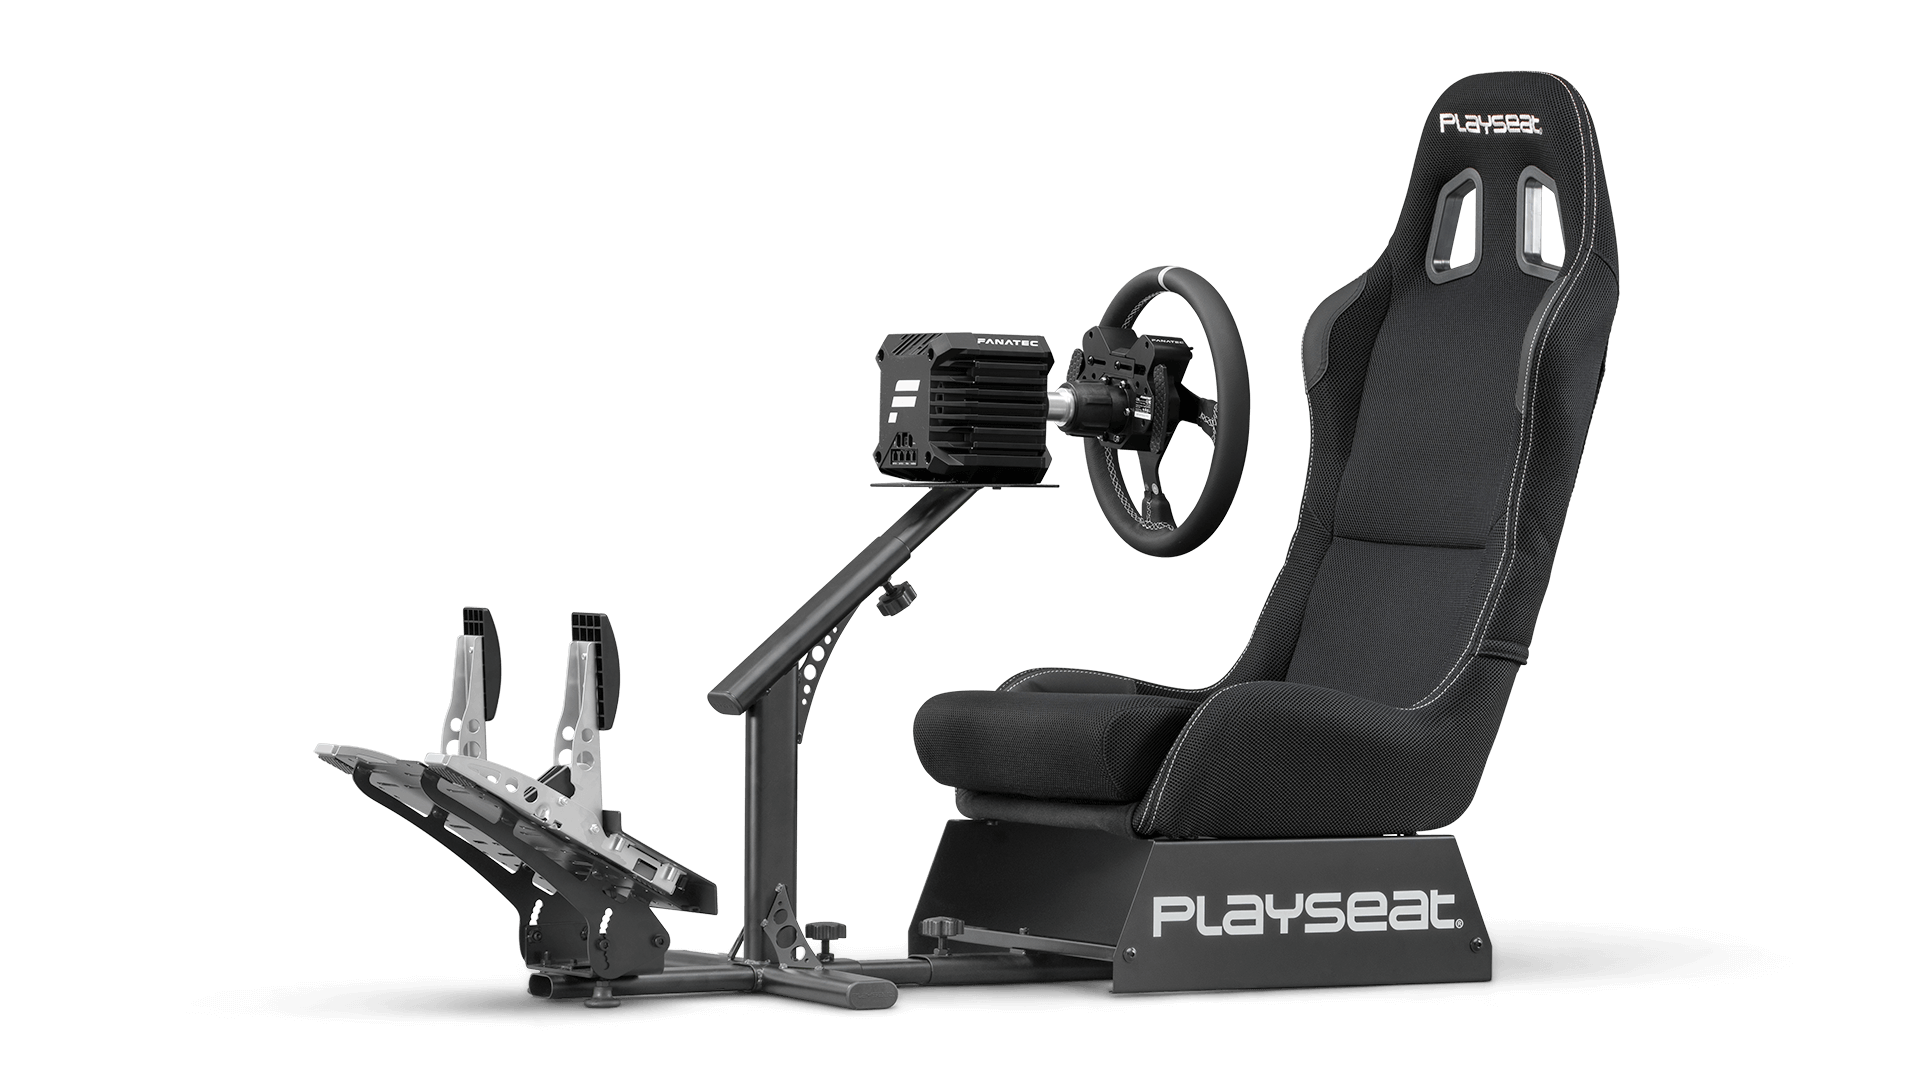 playseat-evolution-black-actifit-racing-simulator-front-angle-view-fanatec-1920x1080.png